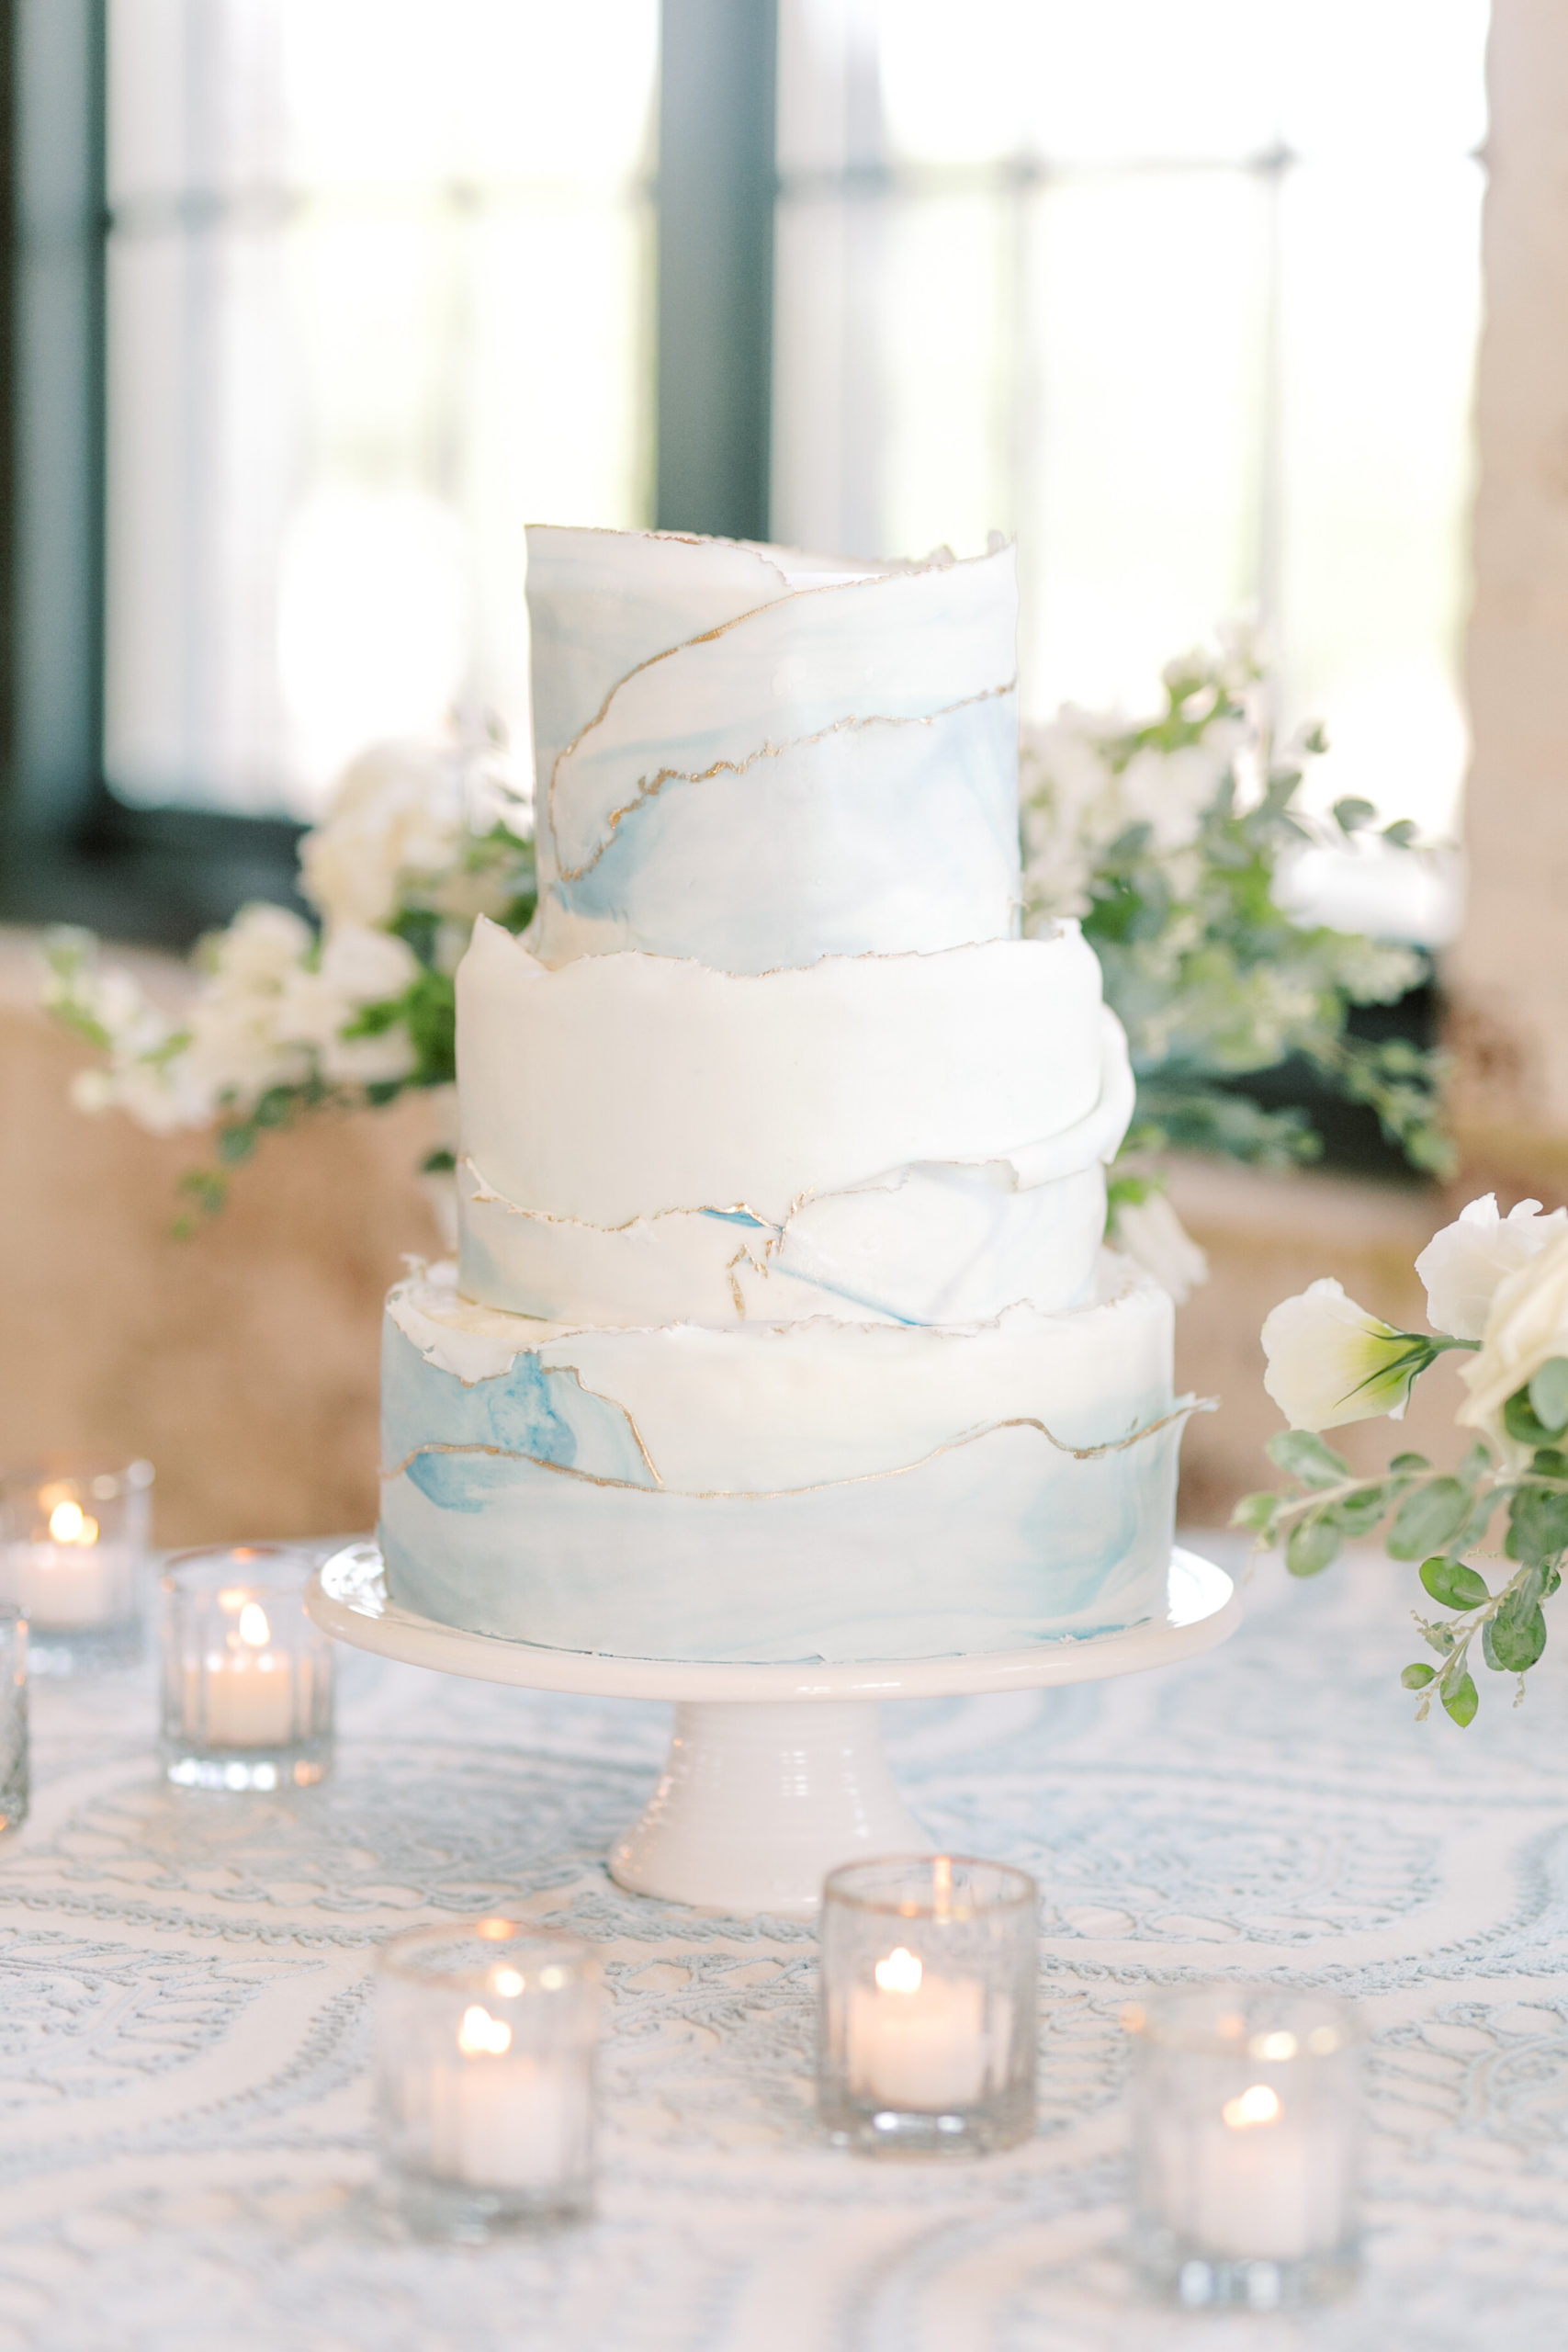 Cake by The Cedar Room / Photo by Jenna Marie Weddings